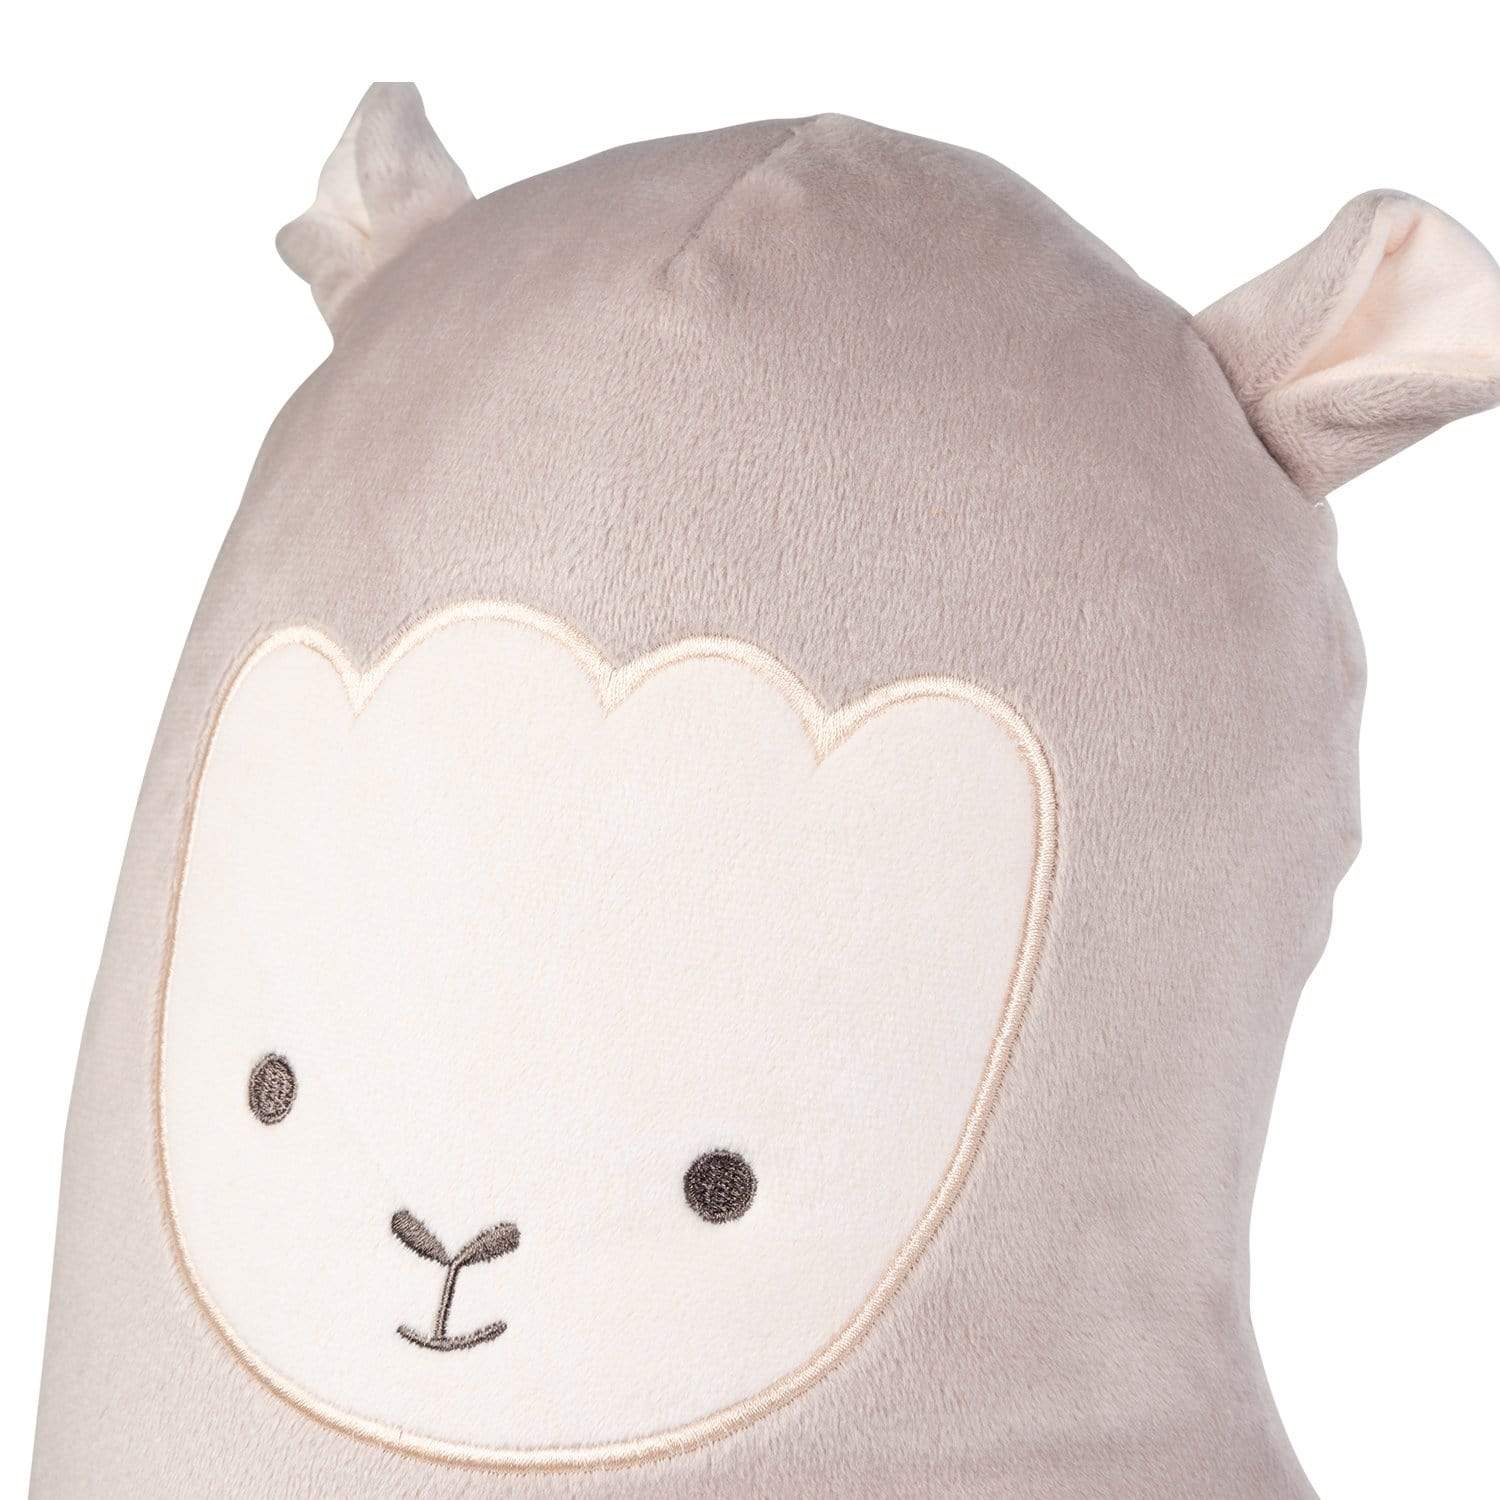 Adora Glow in the Dark Plush Pillow - Llama Stuffed Animal Design